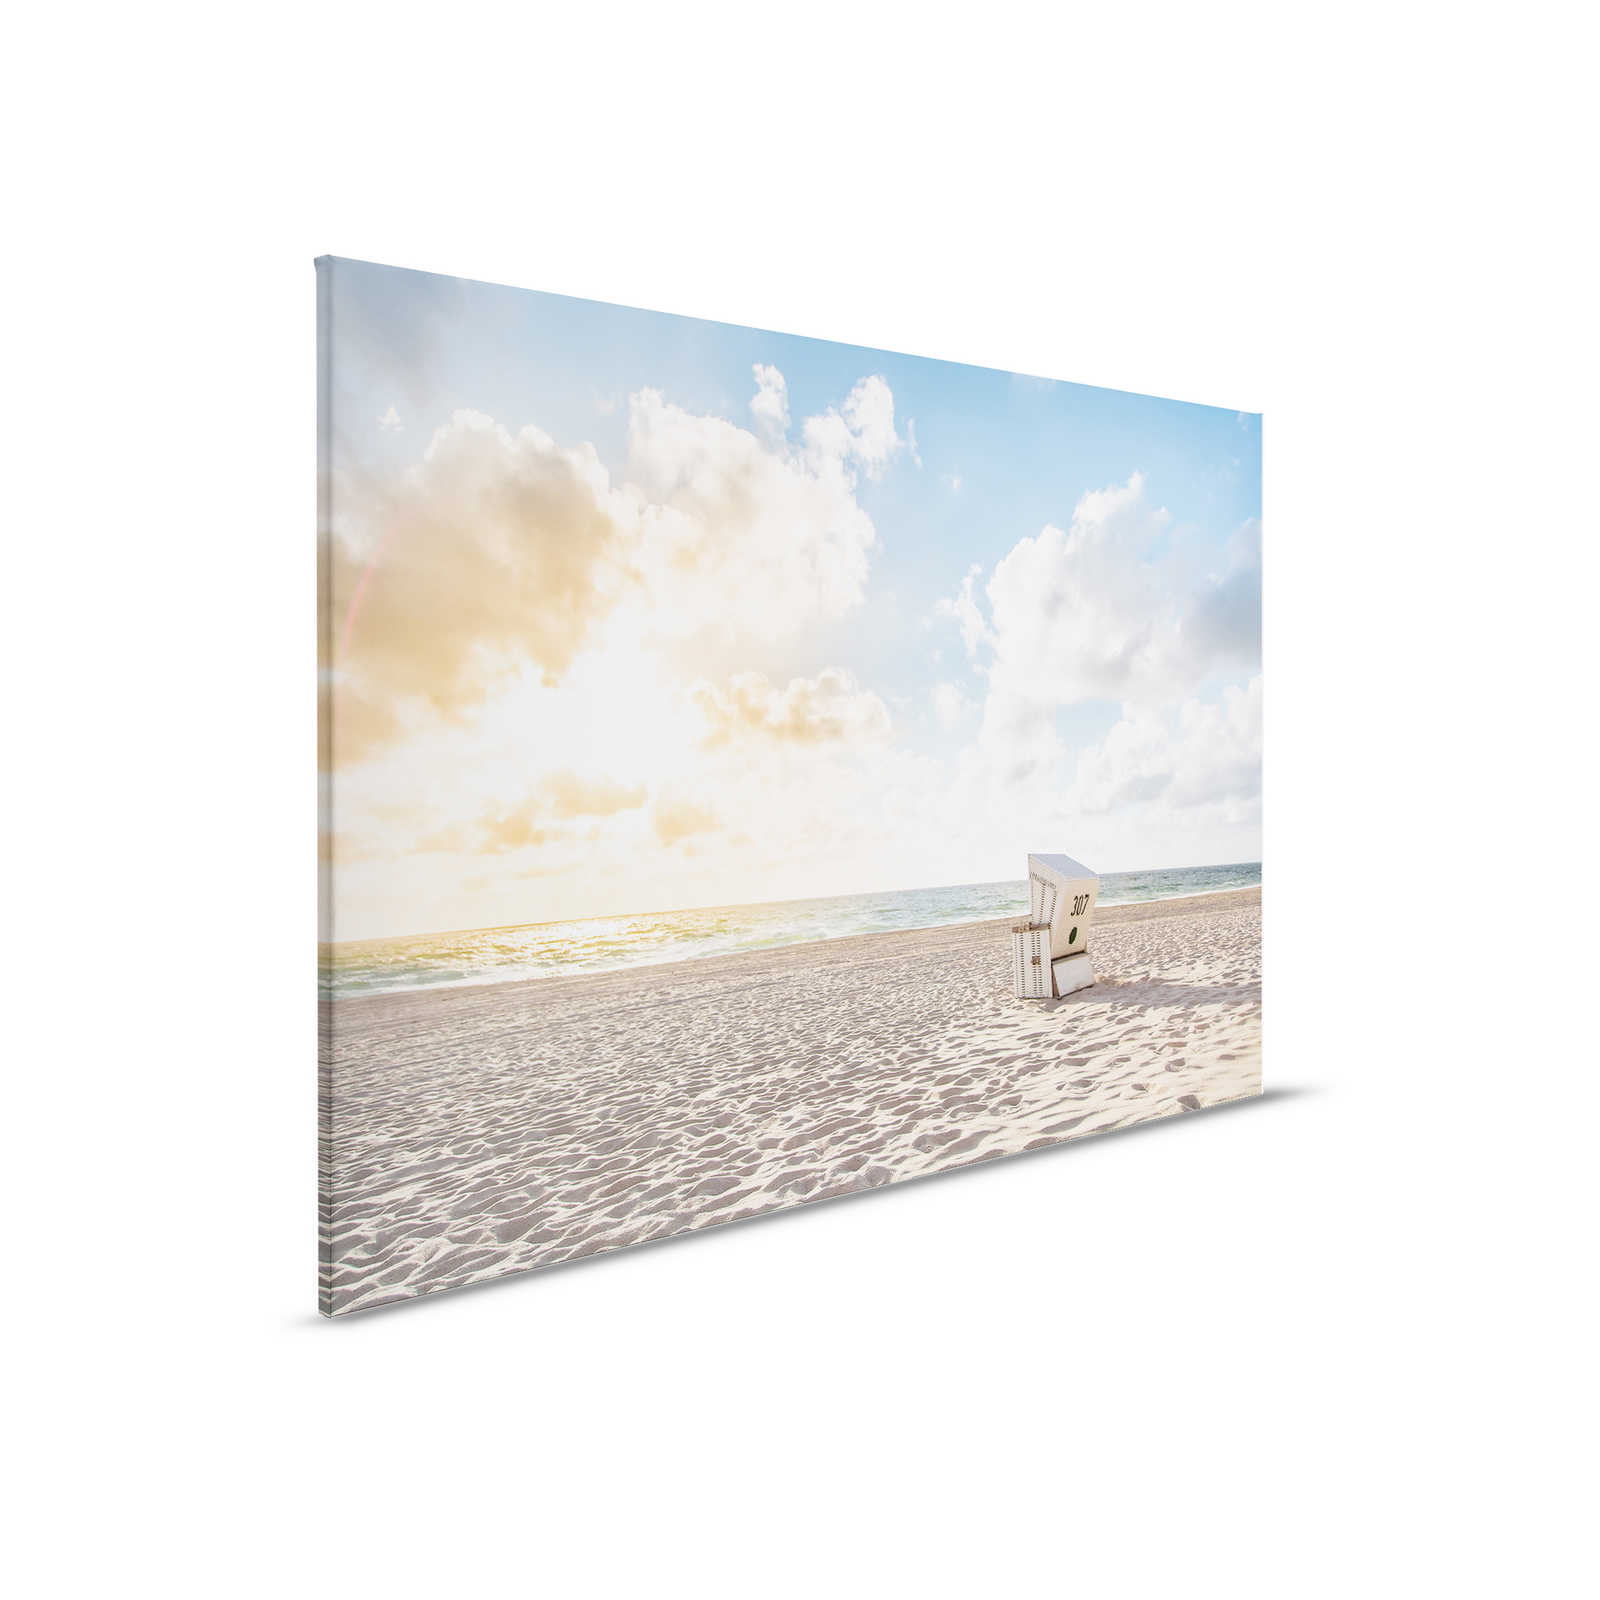         Canvas with beach chair at sunrise - 0.90 m x 0.60 m
    